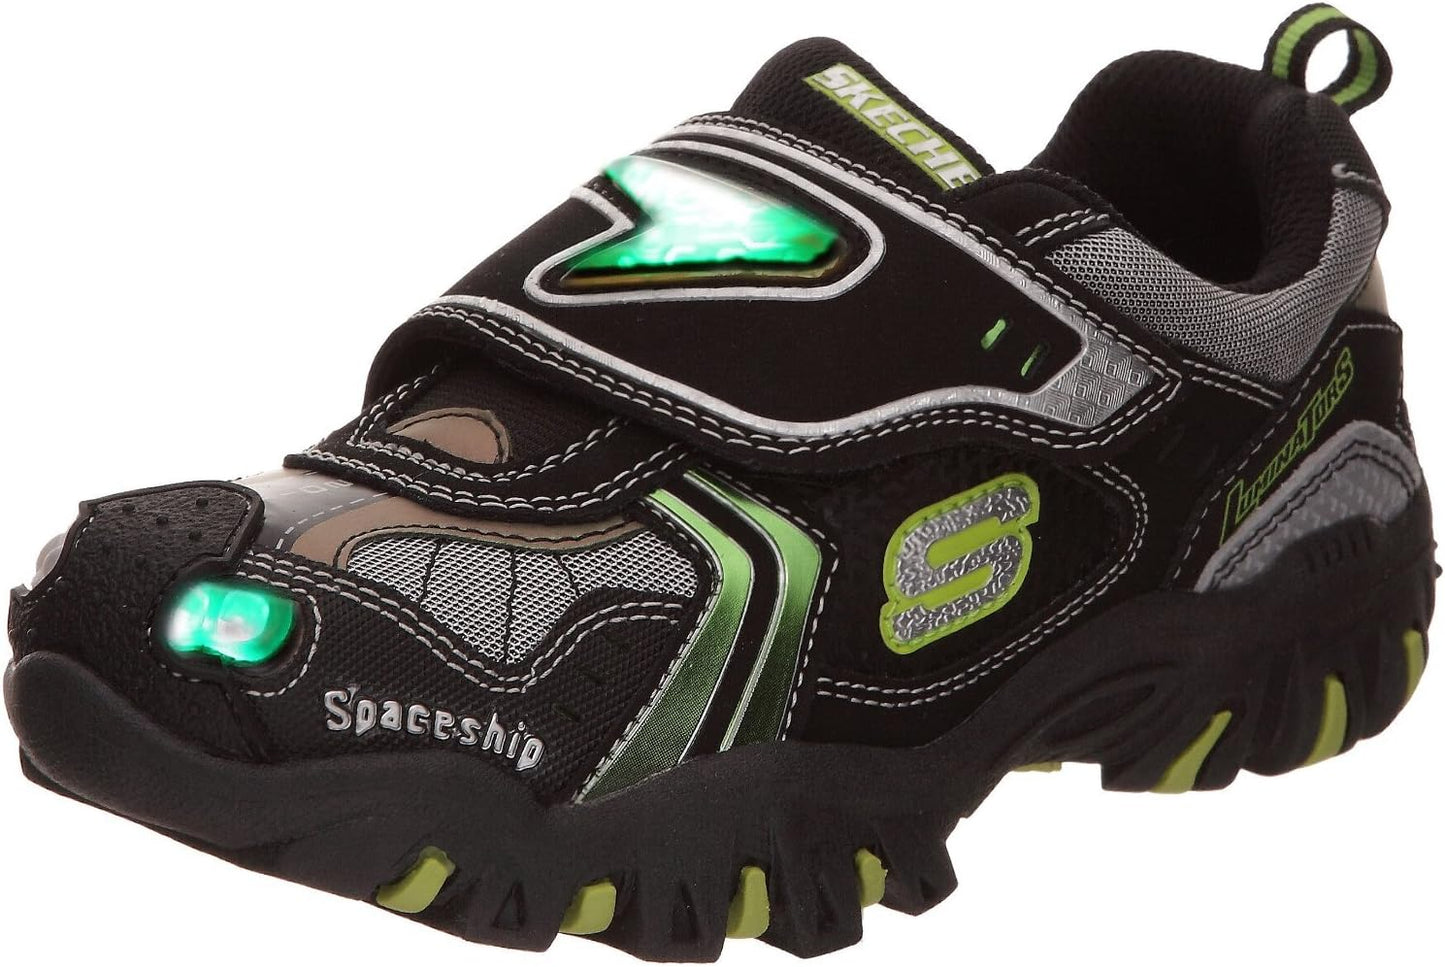 Skechers Damager Spaceship Sneaker Noir/Lime Taille Petits Enfants US 2.5 | UE 34